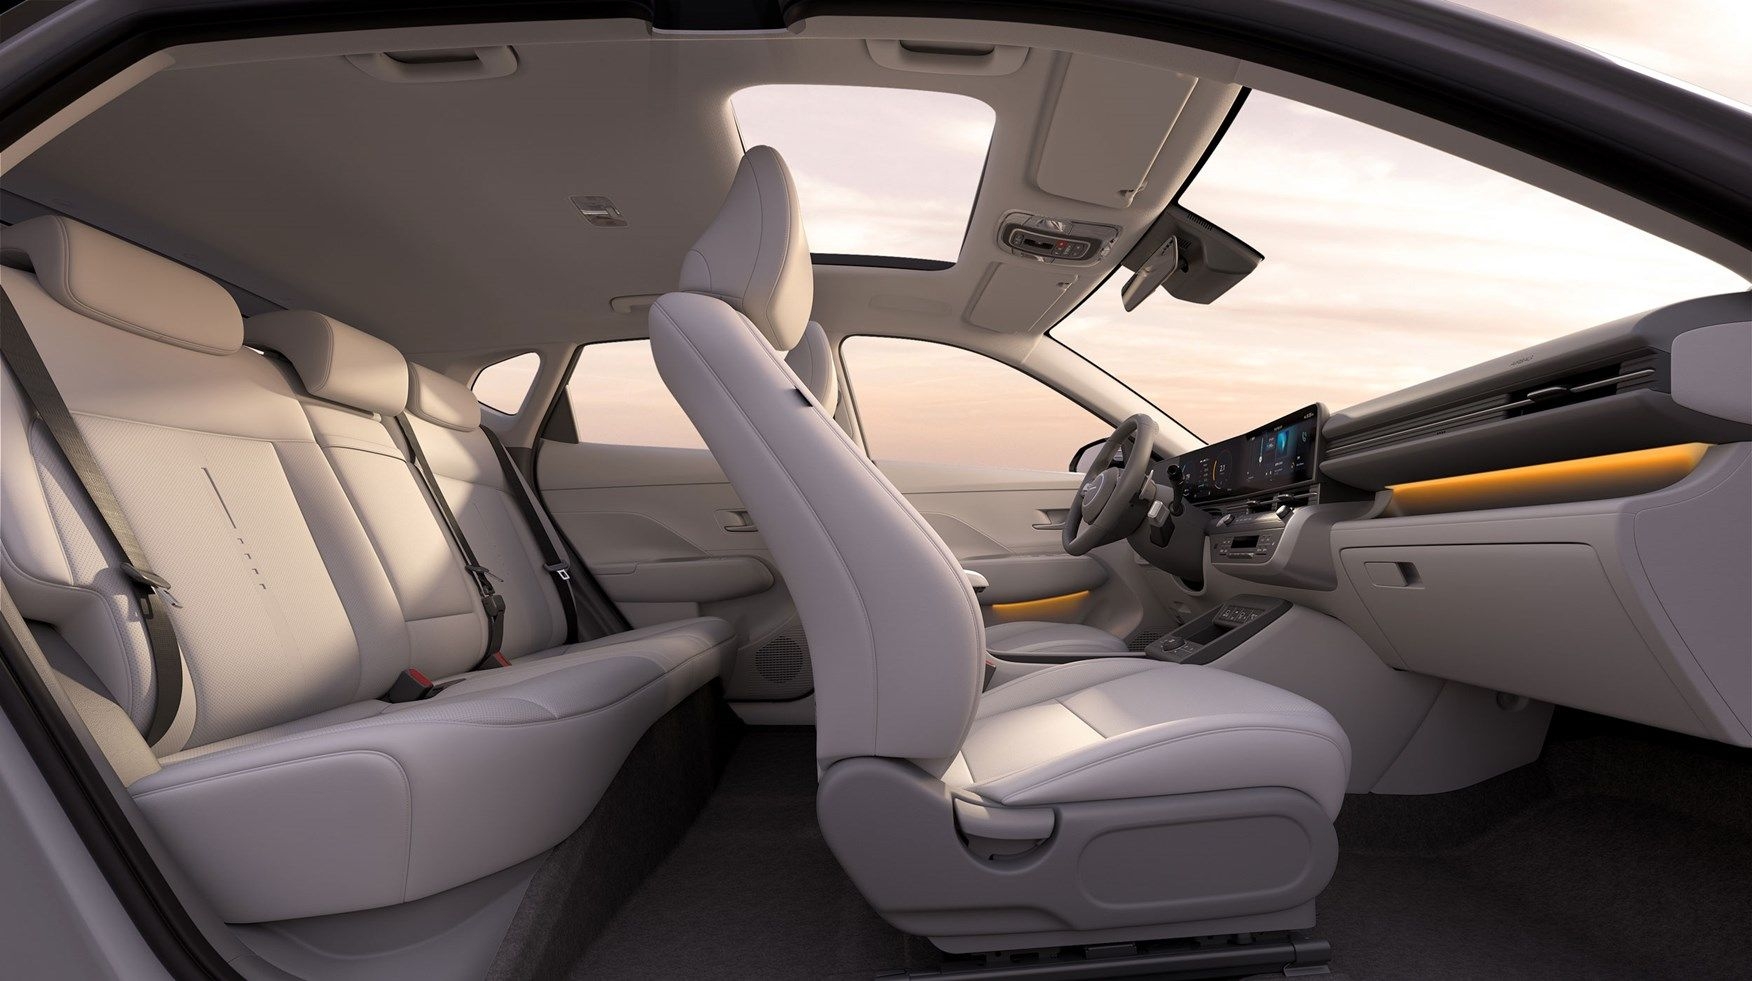 The all-new Hyundai Kona Revealed Abroad: Battlestar-Galactic-inspired Sci-Fi SUV